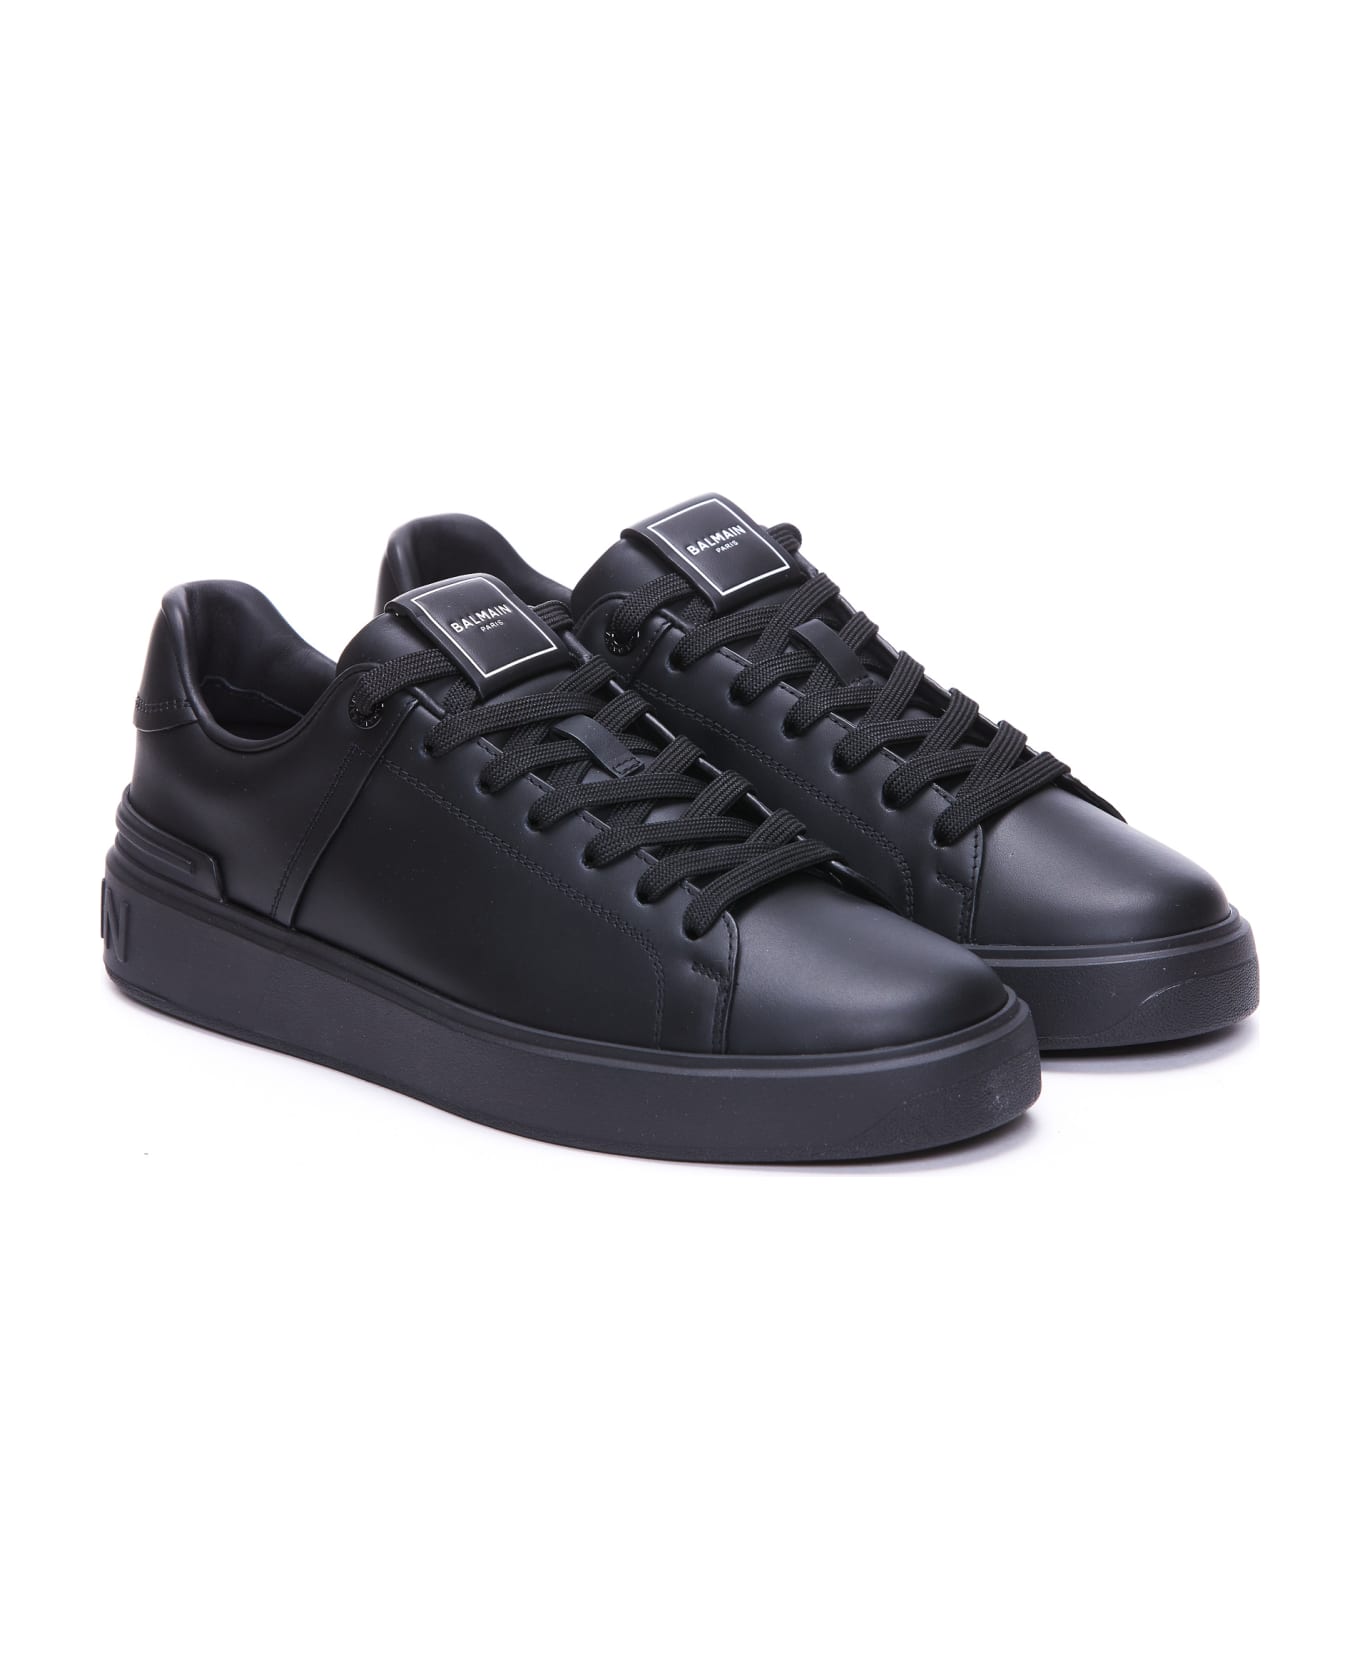 Balmain B Court Sneakers - Black スニーカー